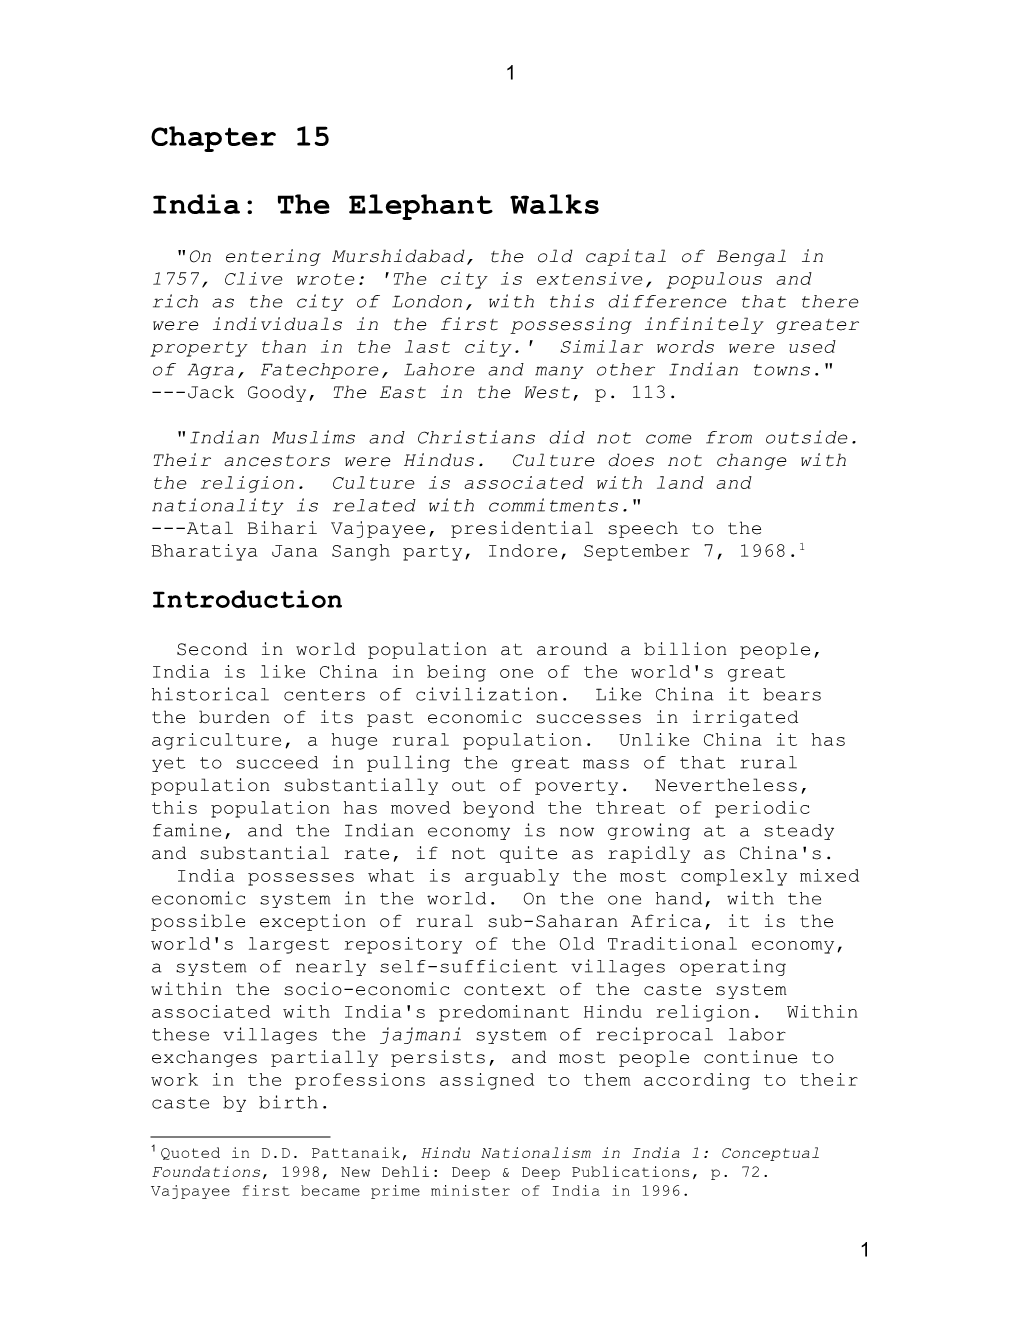 India: the Elephant Walks